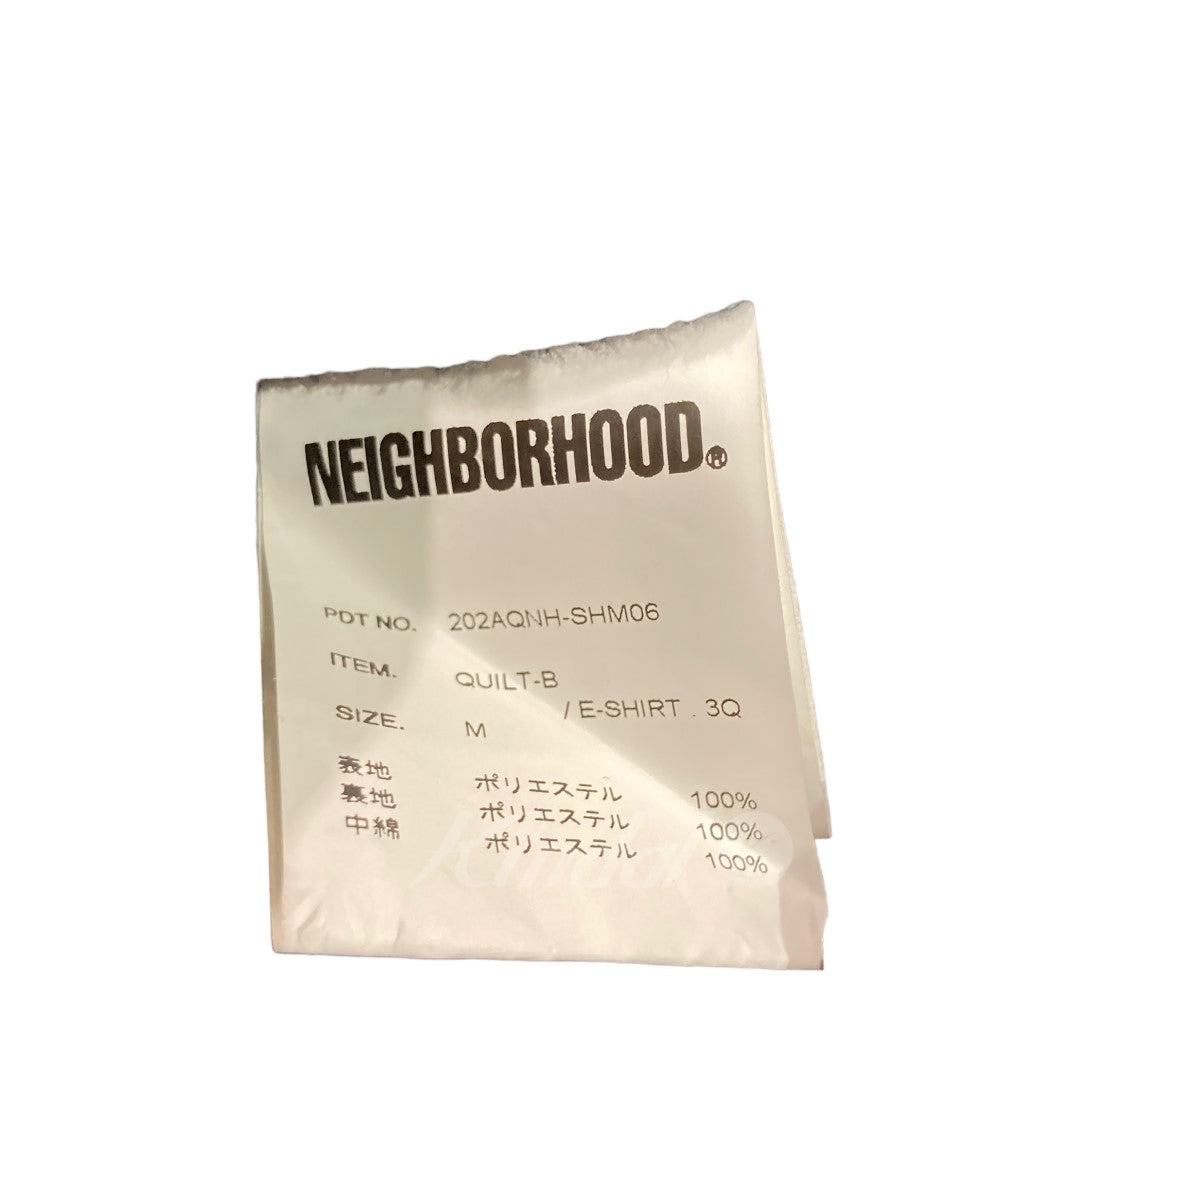 NEIGHBORHOOD(ネイバーフッド) 20AW「QUILT-B／E-SHIRT．3Q」バンダナ ...